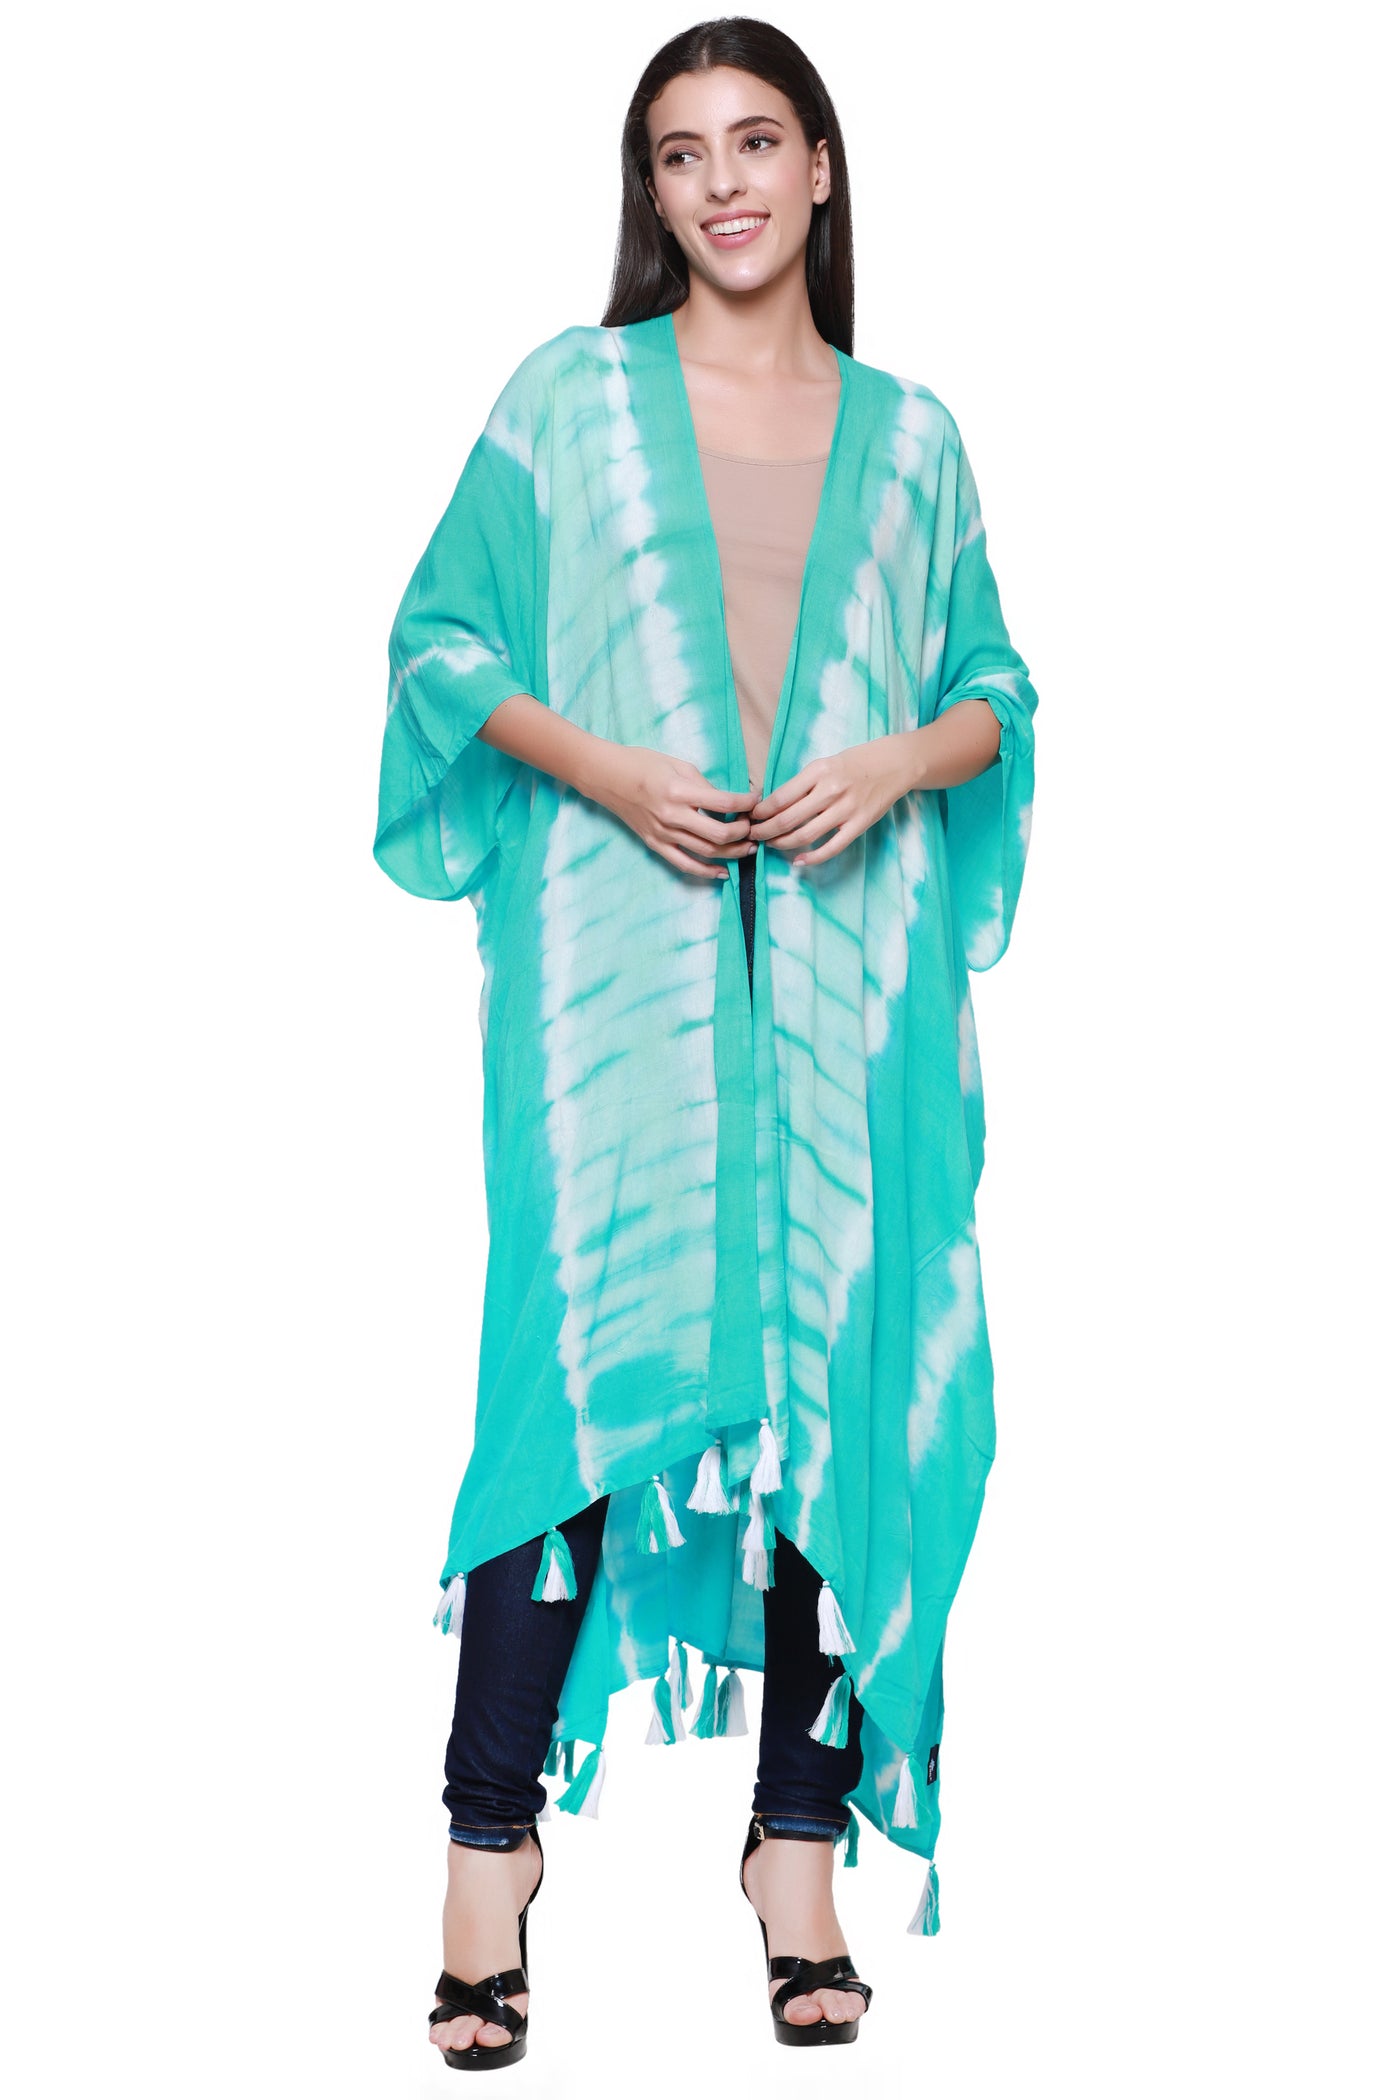 Tie Dye Beach Cover Up Kimono22030 - Advance Apparels Inc